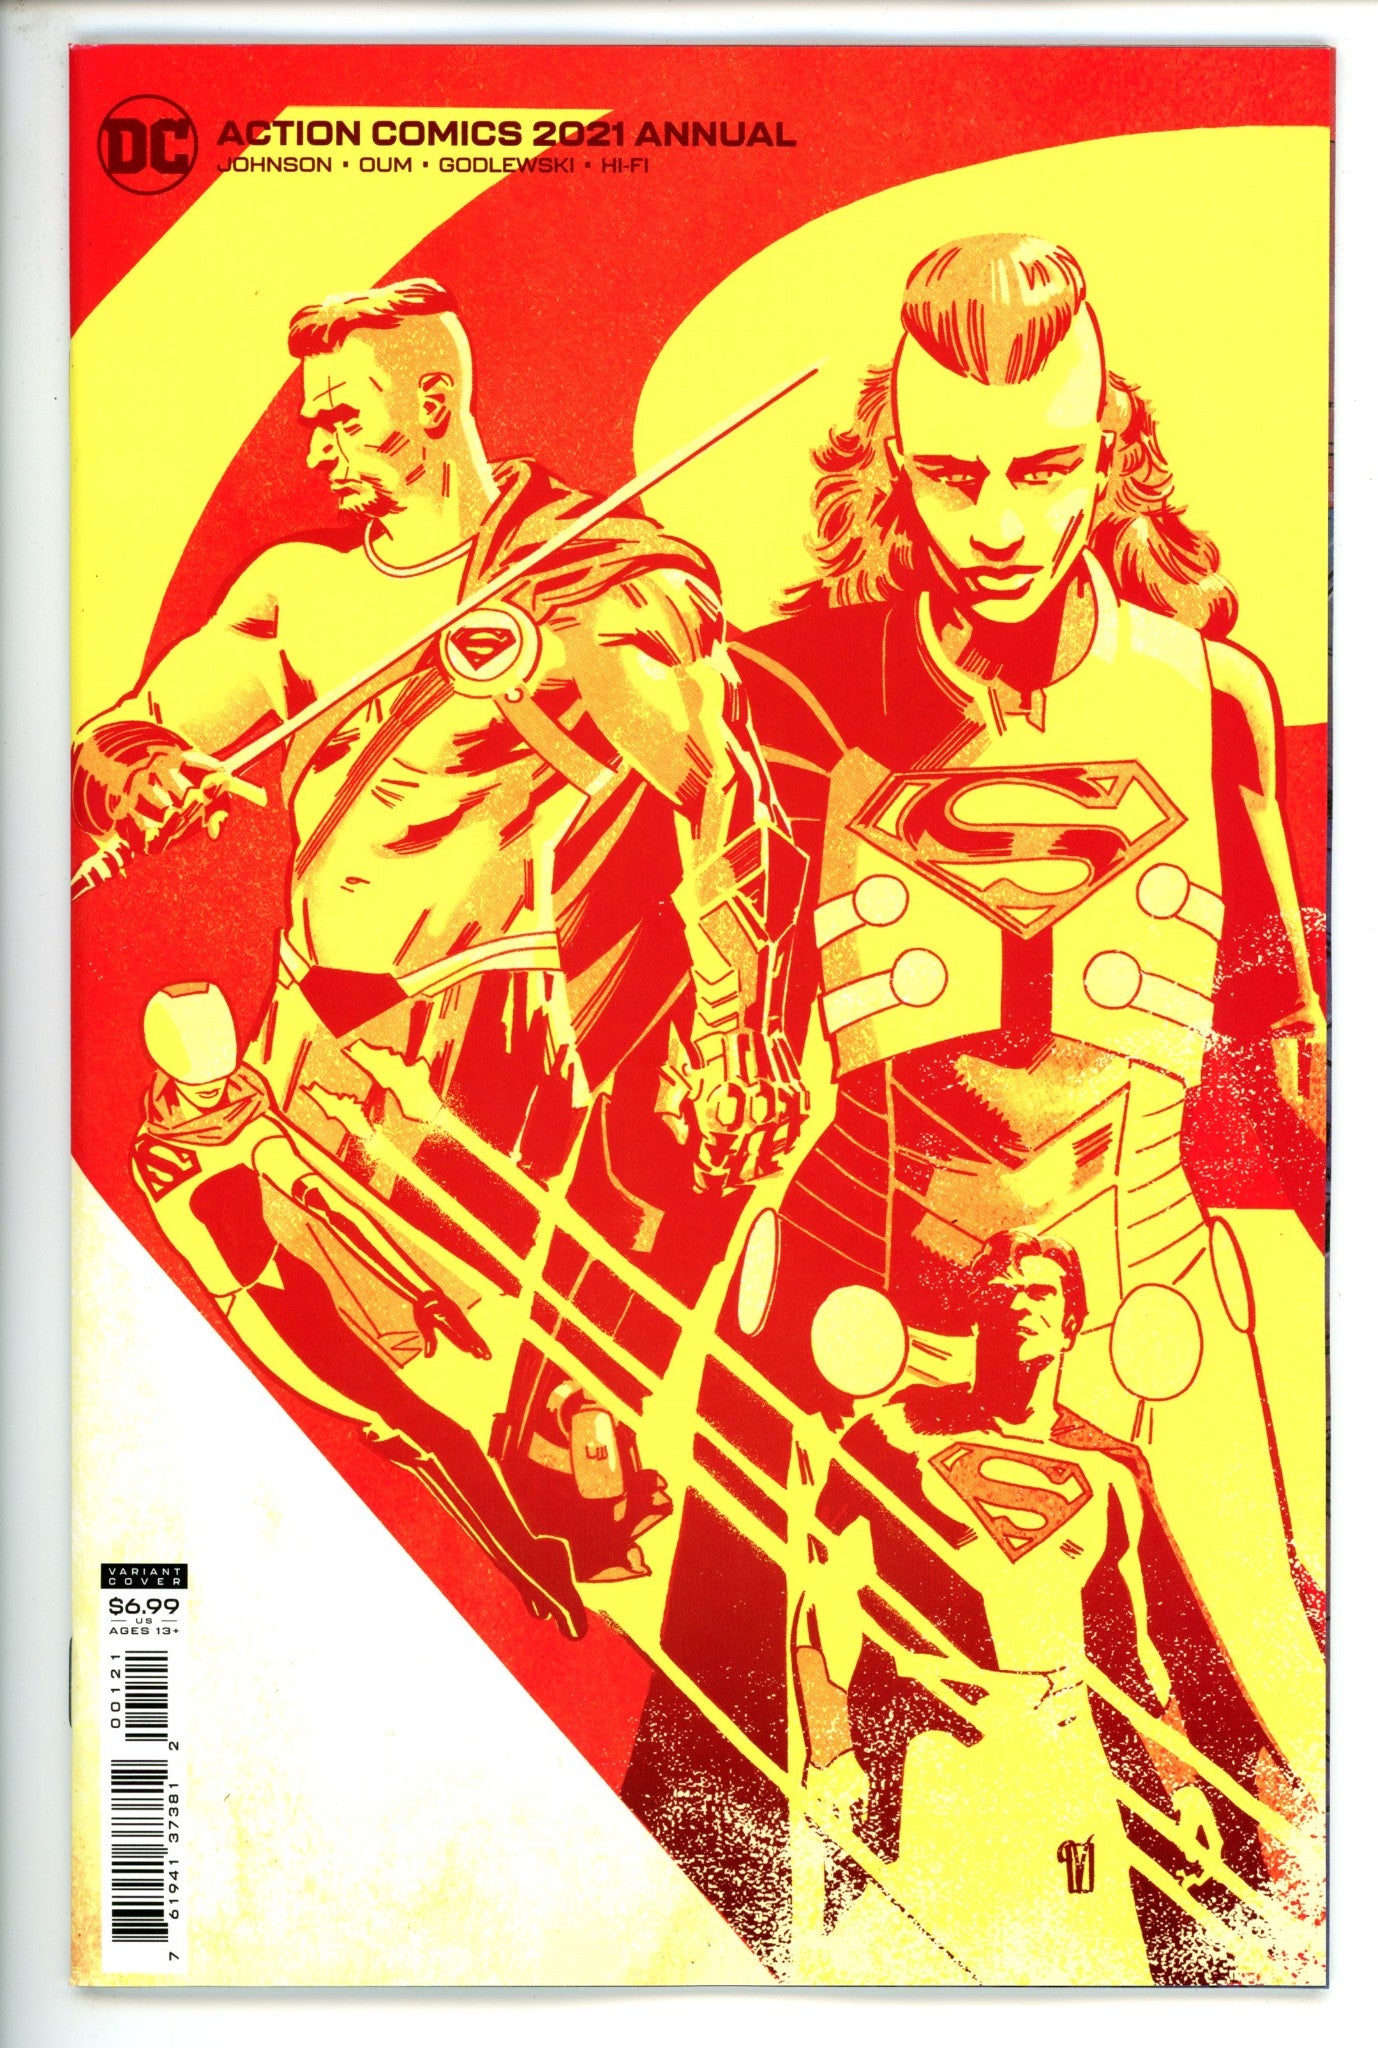 Action Comics Vol 3 Annual 1 Variant (2021)